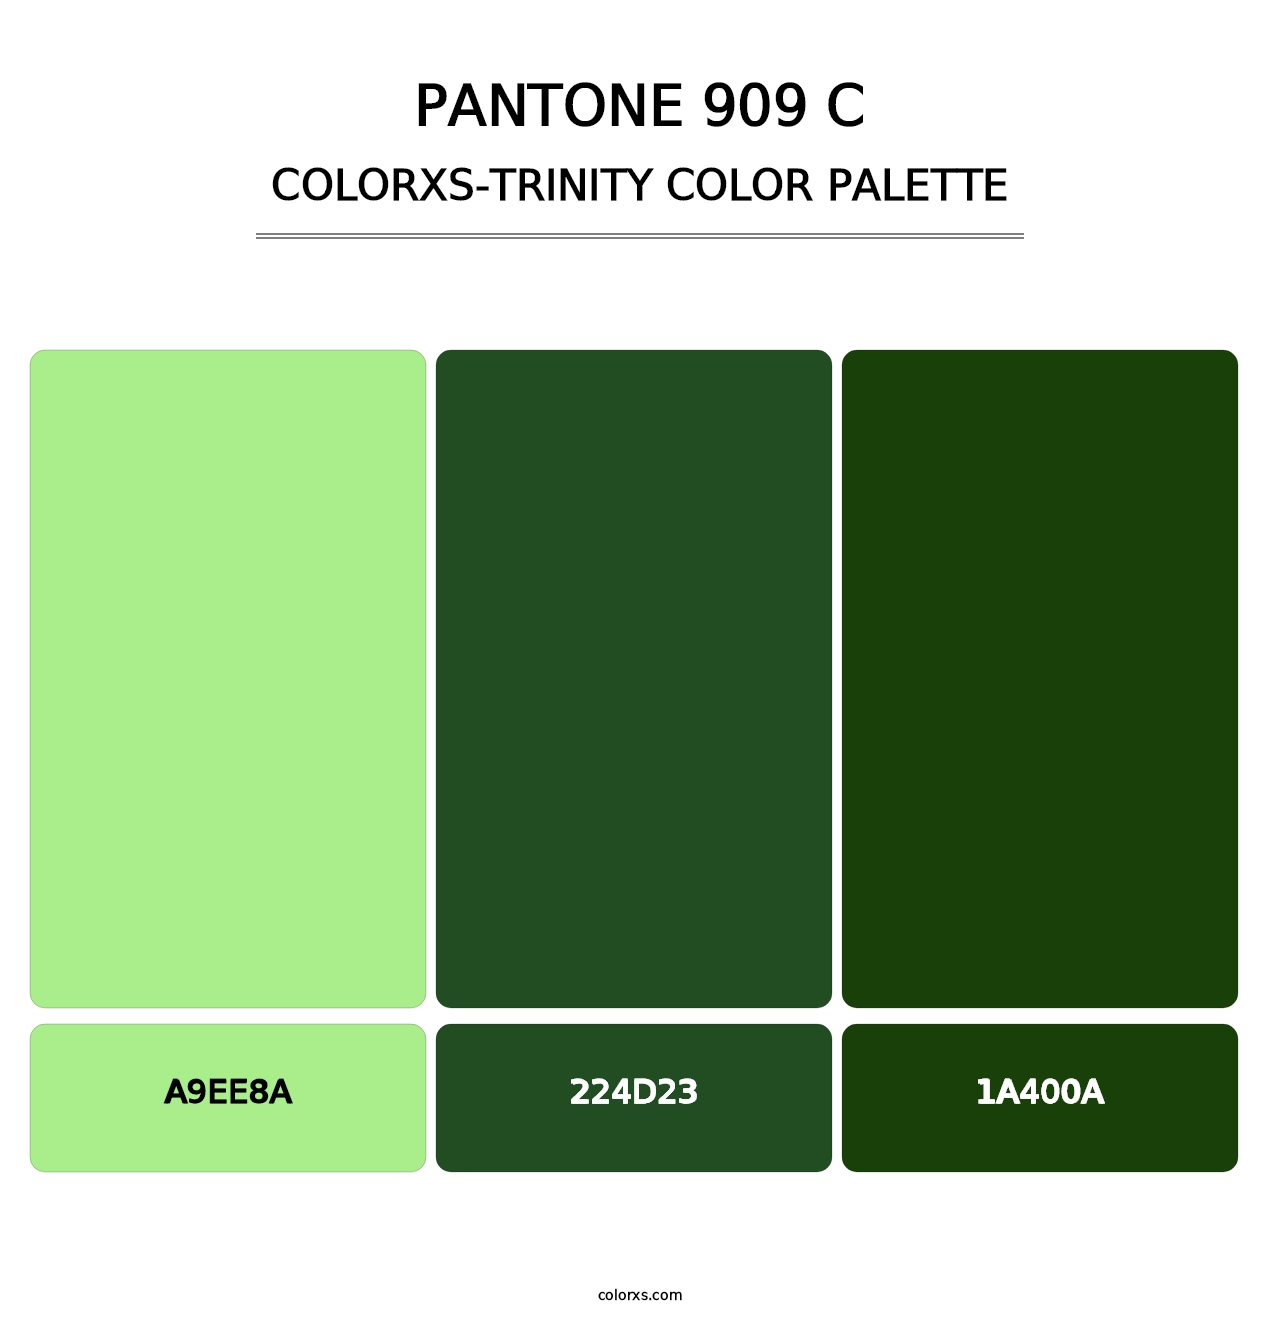 PANTONE 909 C - Colorxs Trinity Palette